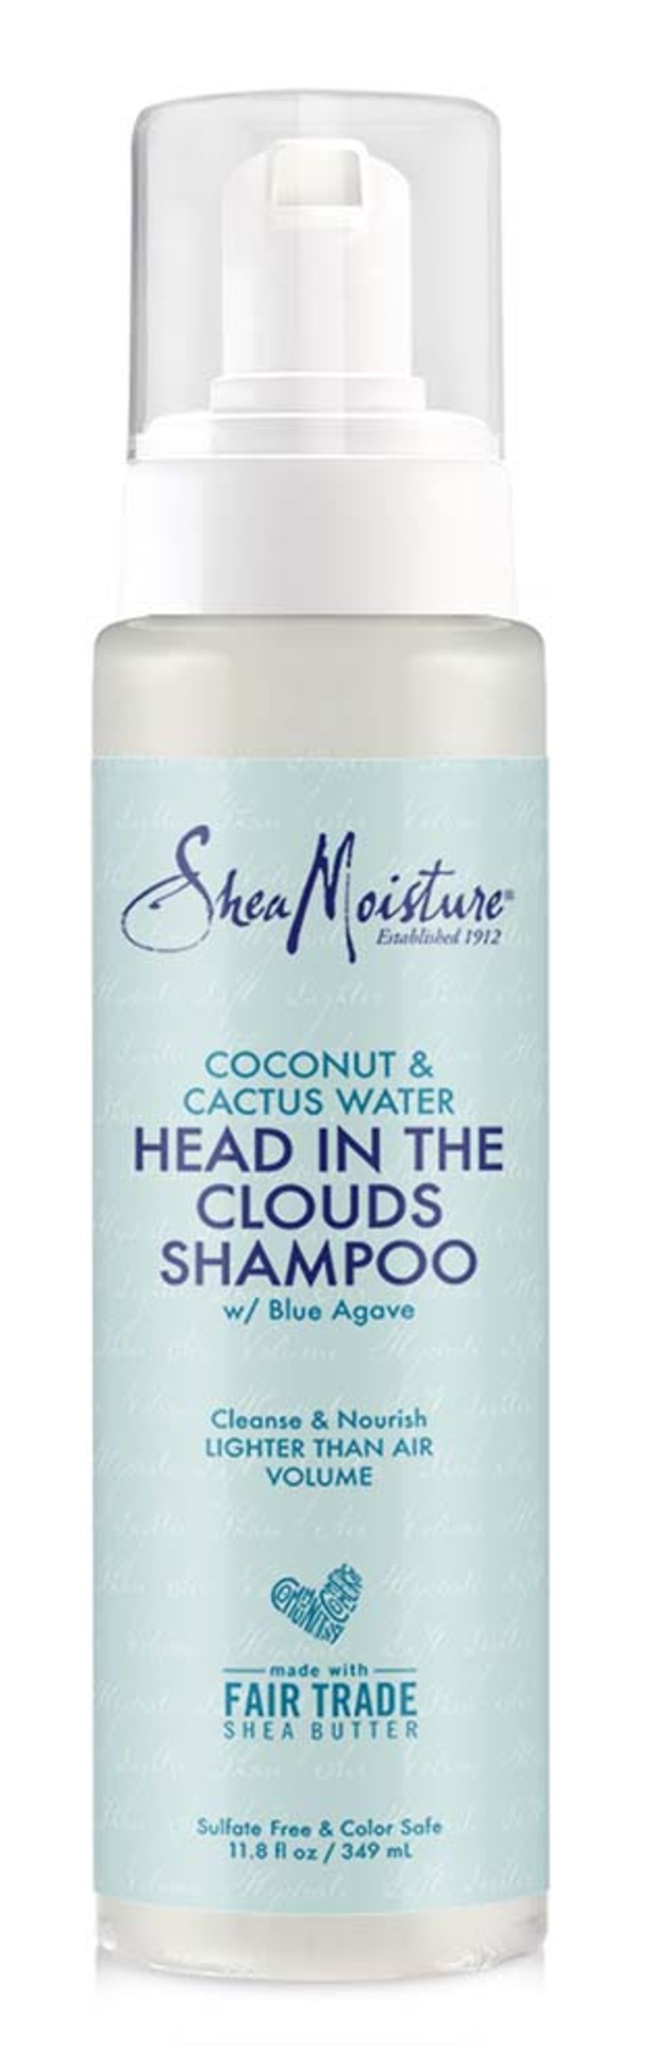 Shea Moisture Coconut & Cactus Water Head In The Clouds Shampoo